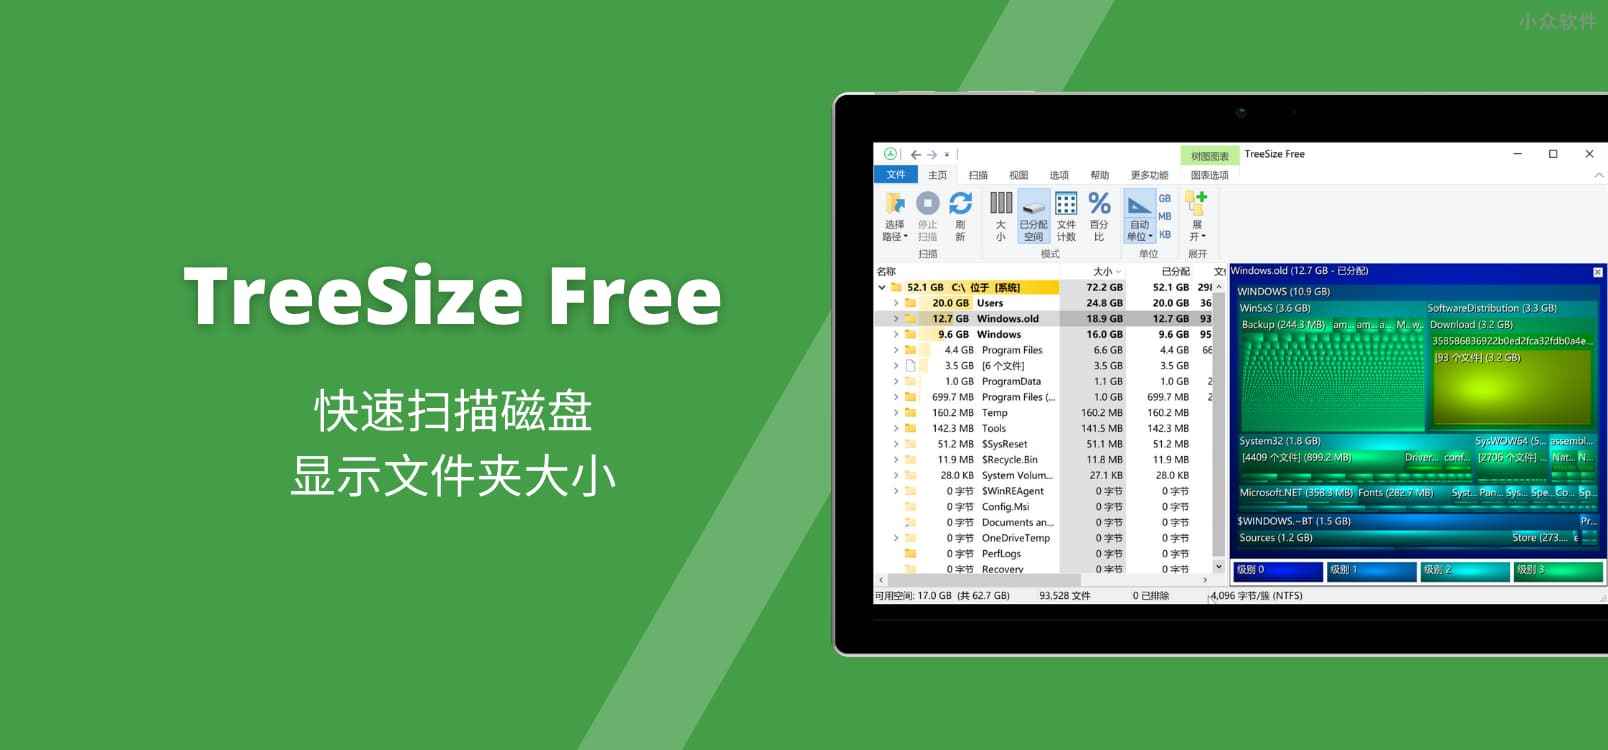 TreeSize Free - 快速扫描磁盘，显示文件夹大小[Windows]